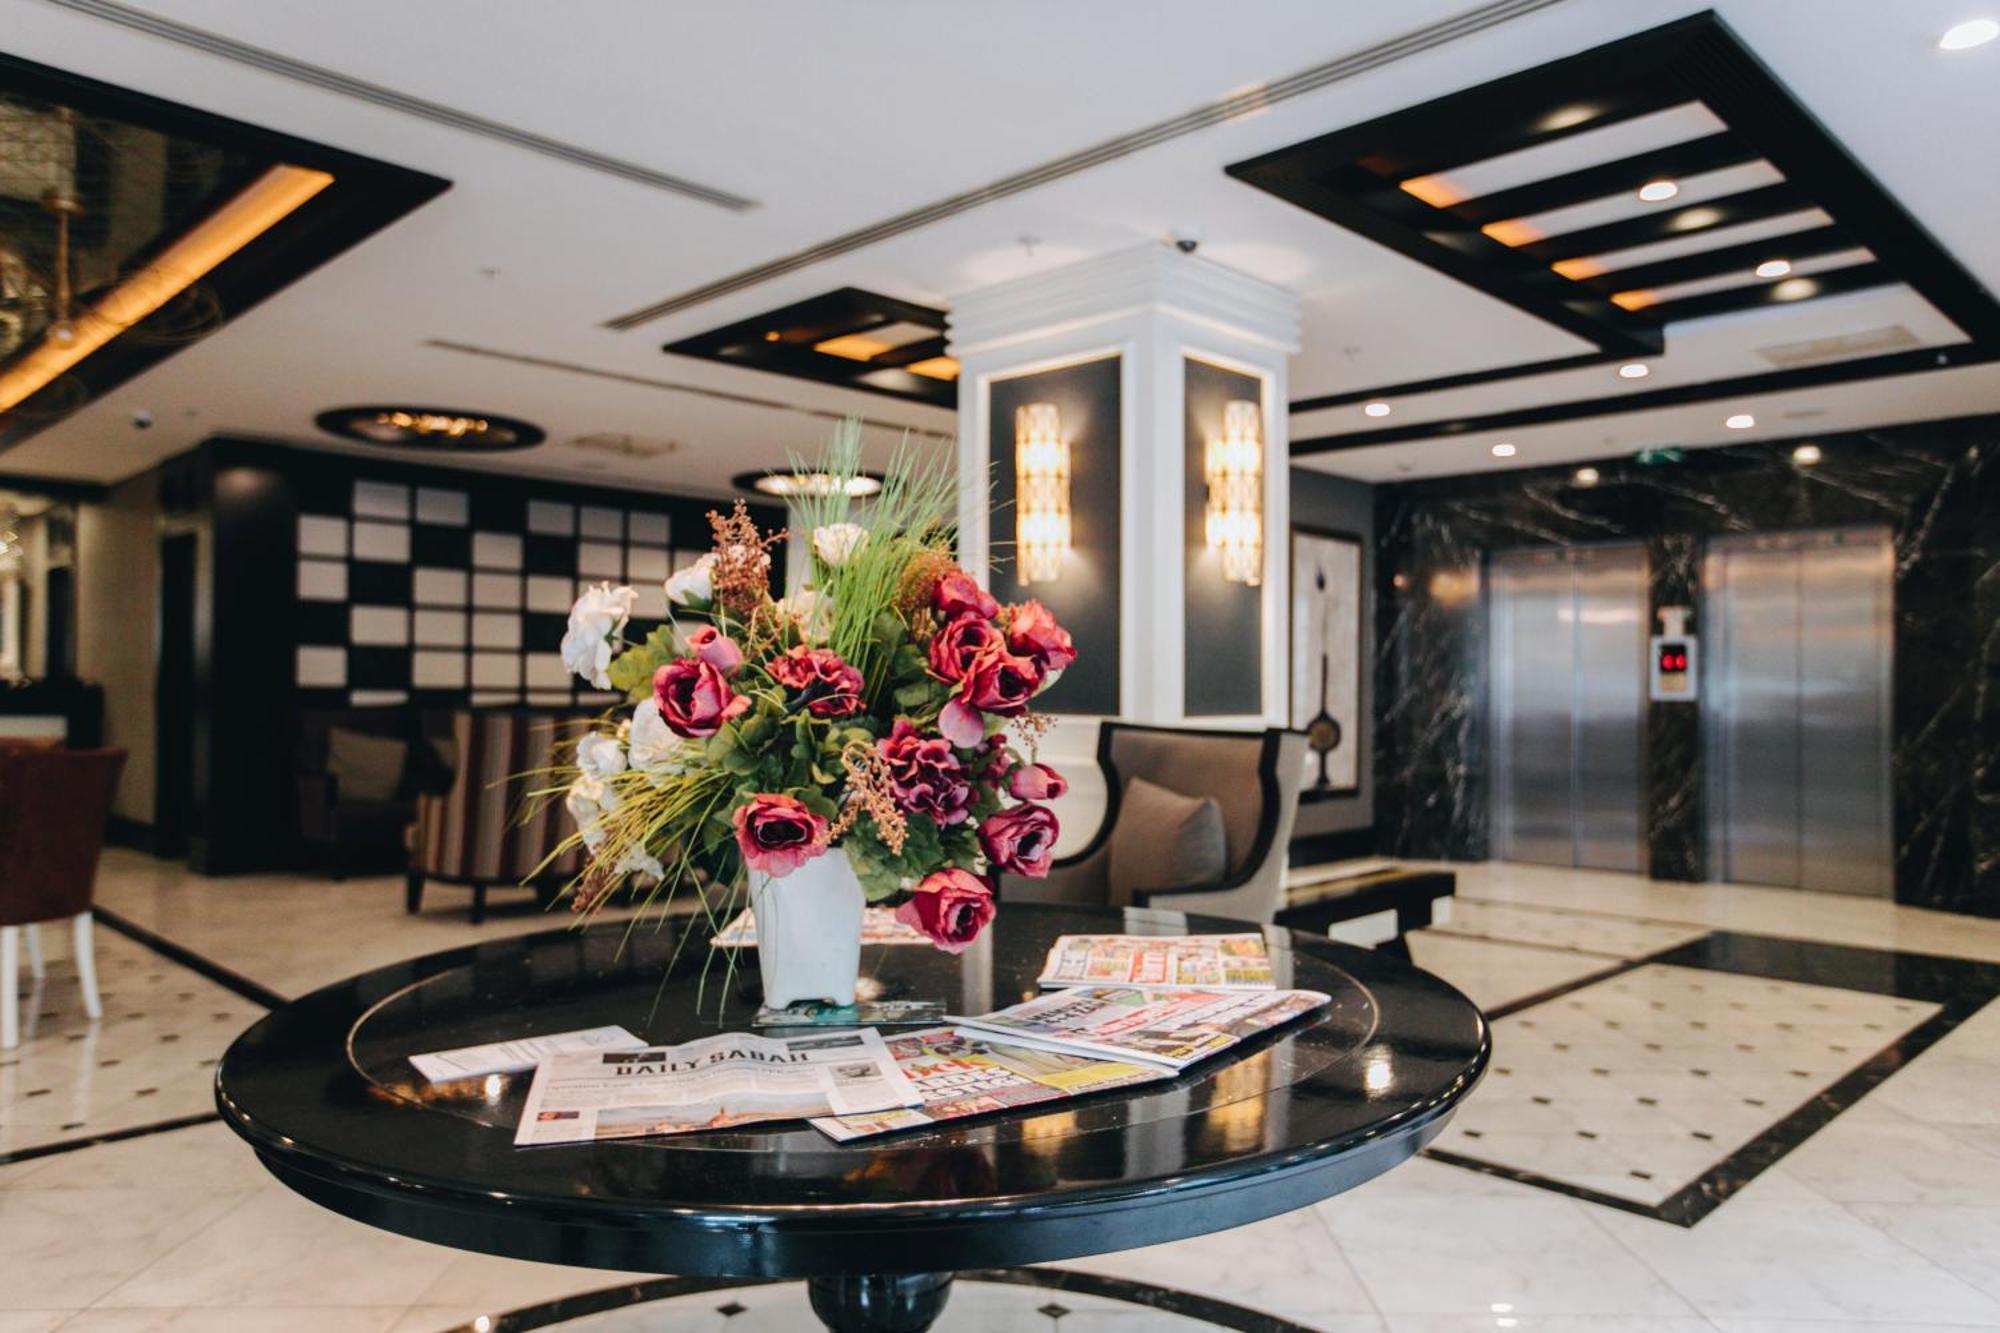 Mia Berre Hotels Istanbulská provincie Exteriér fotografie